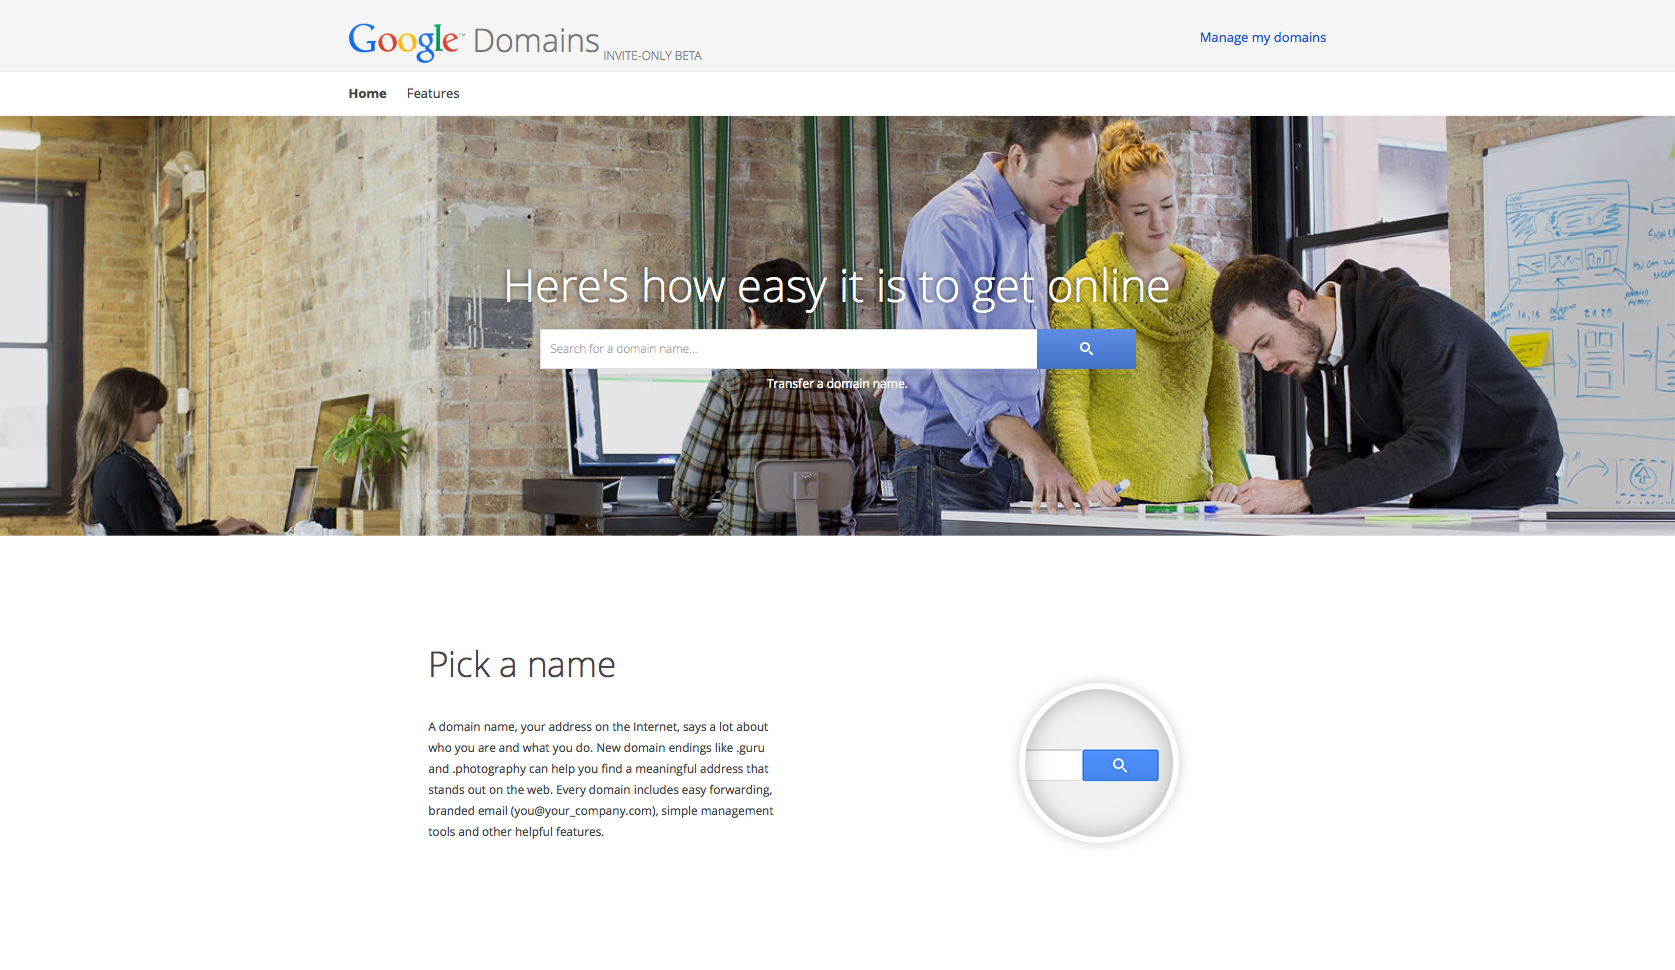 Google wants to sell domain names